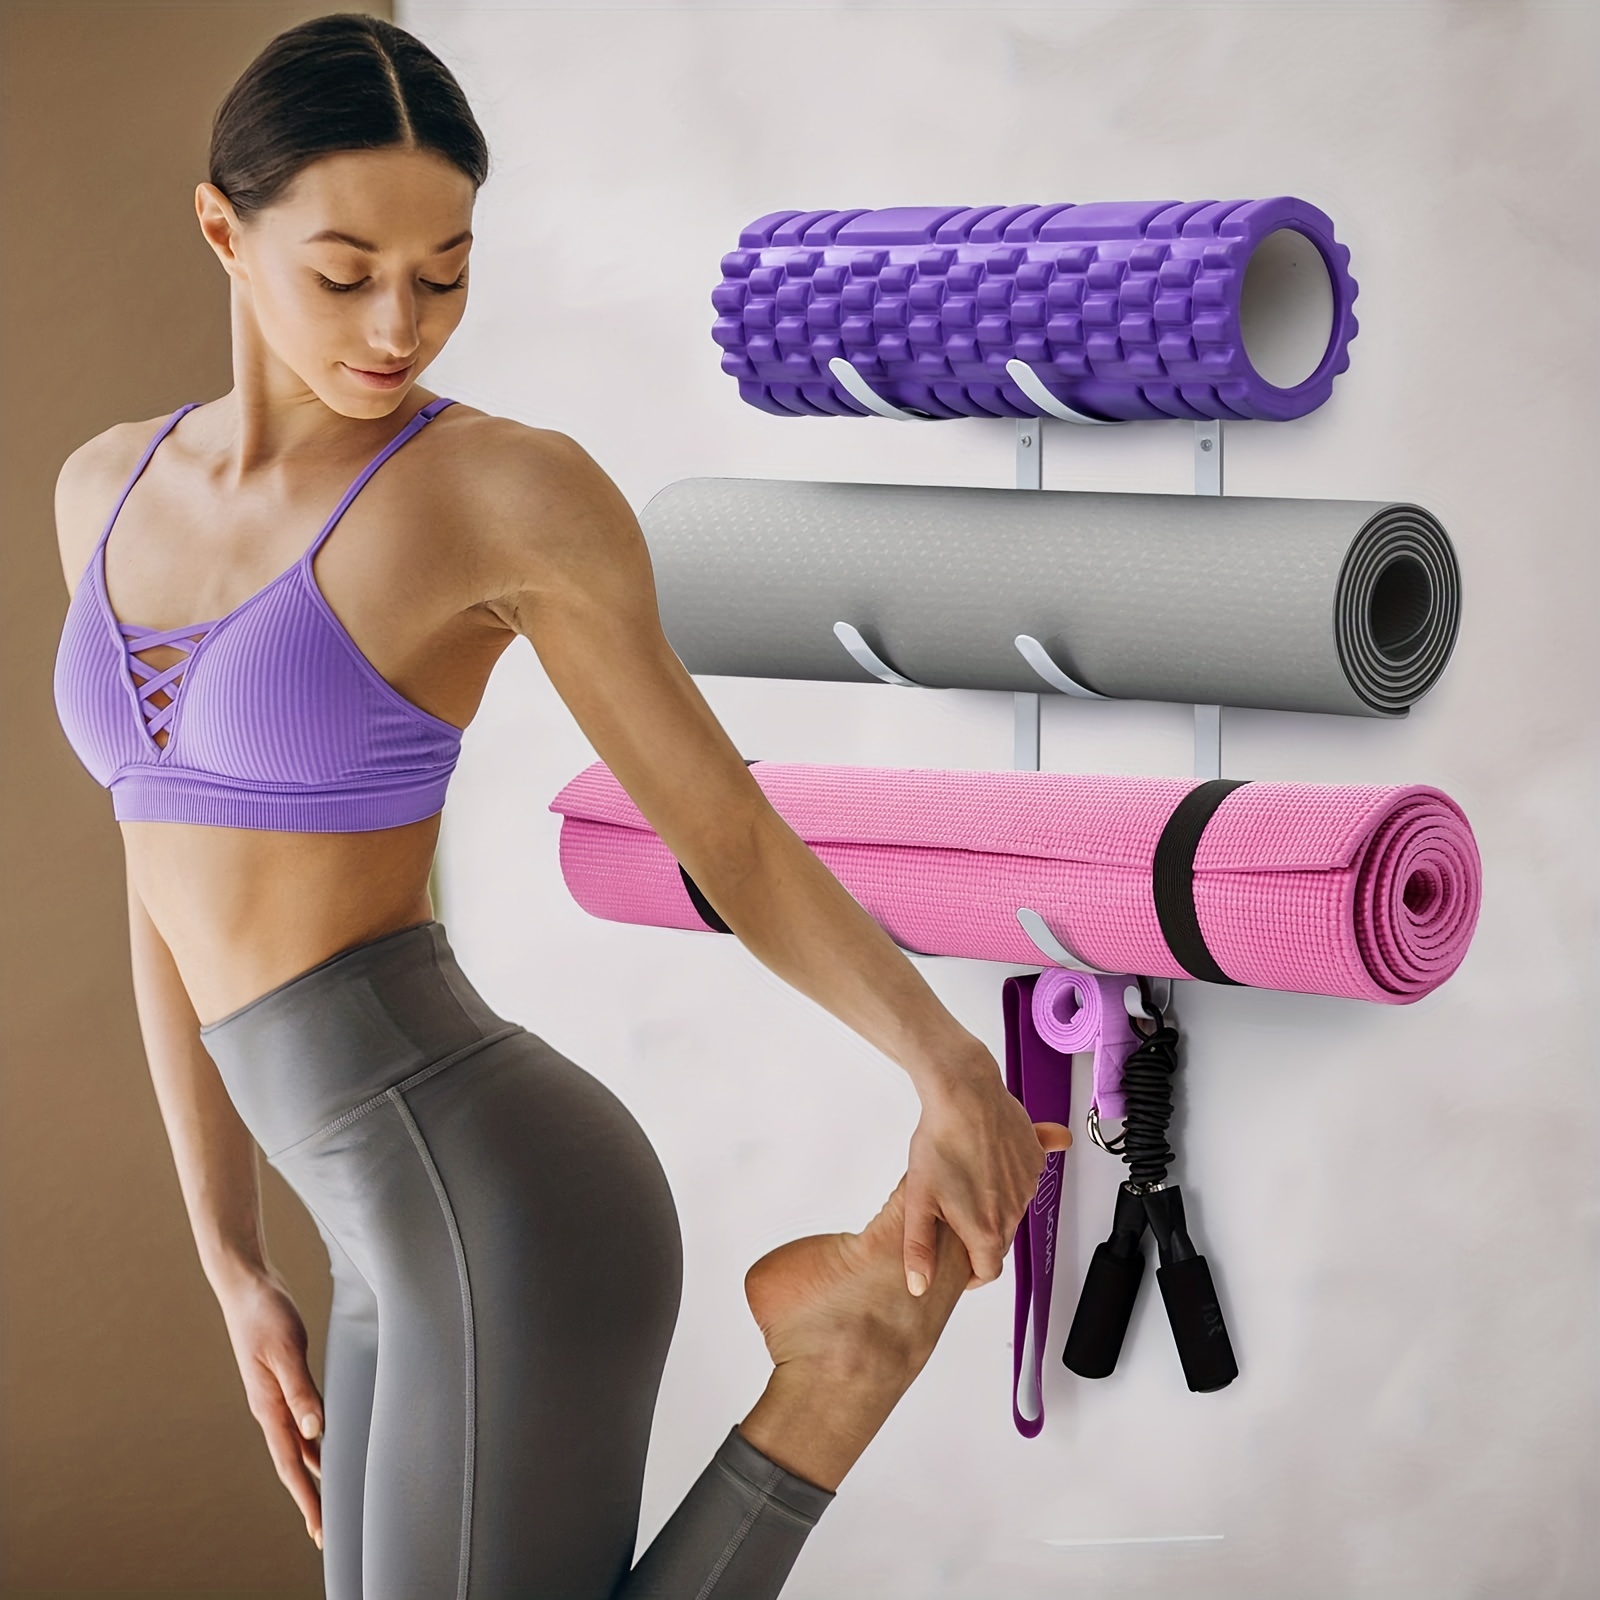 Yoga Mat Storage Rack, Yoga Mat Holder Accessories, Home Gym Equipment Storage  Yoga Mats, Women Men Workout Equipment Organization With Wheels